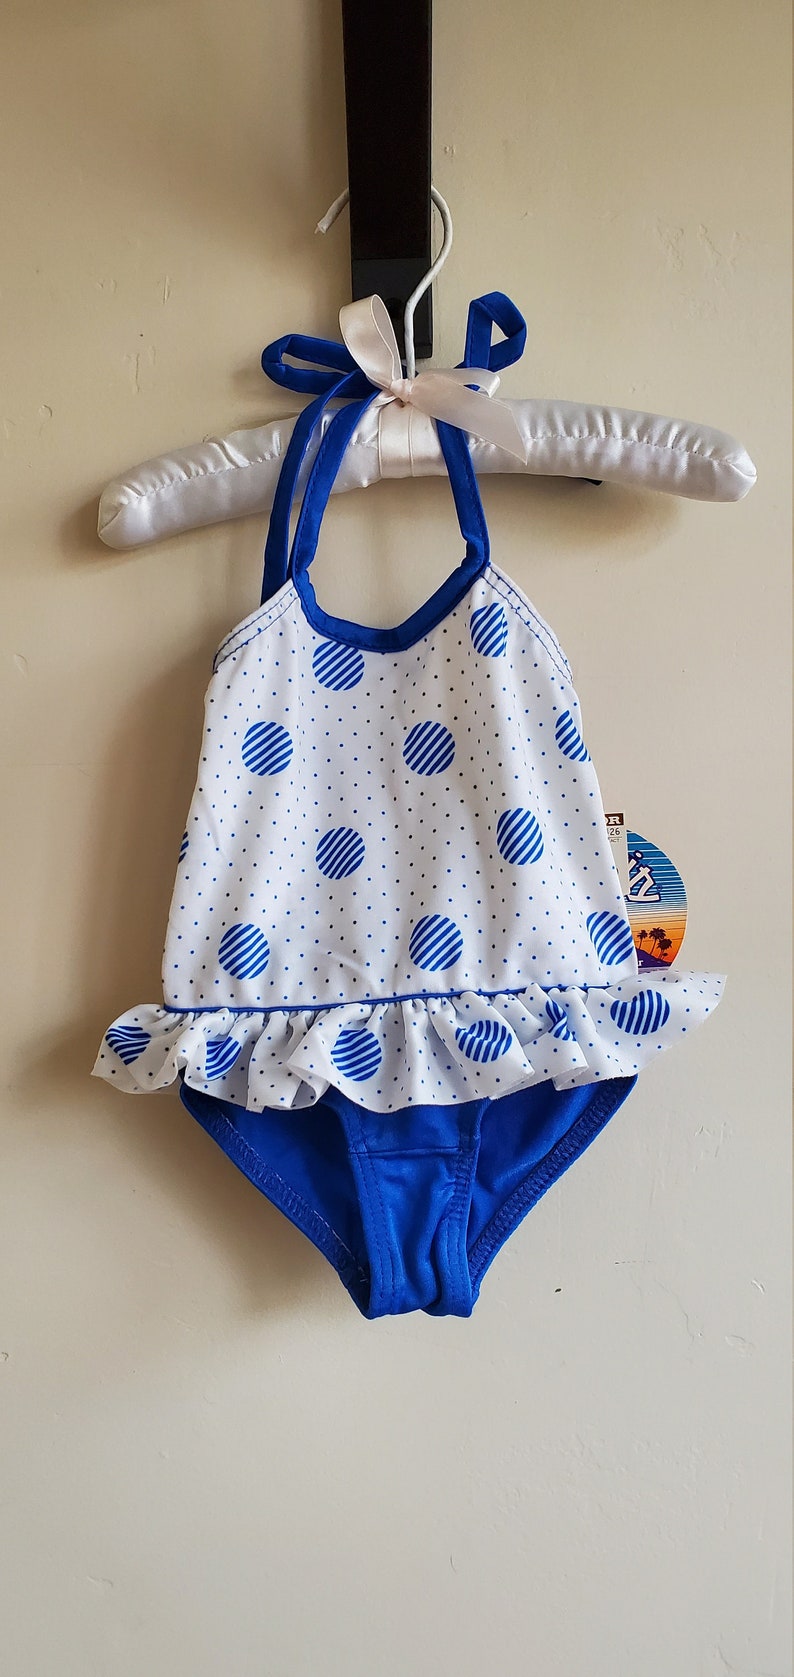 Vintage 1970s Girl's Infant Swimsuit Vintage Deadstock NWT Girls Infant Aquativity Swimsuit One Piece Blue White Polka Dot Ruffle ILGWU image 8